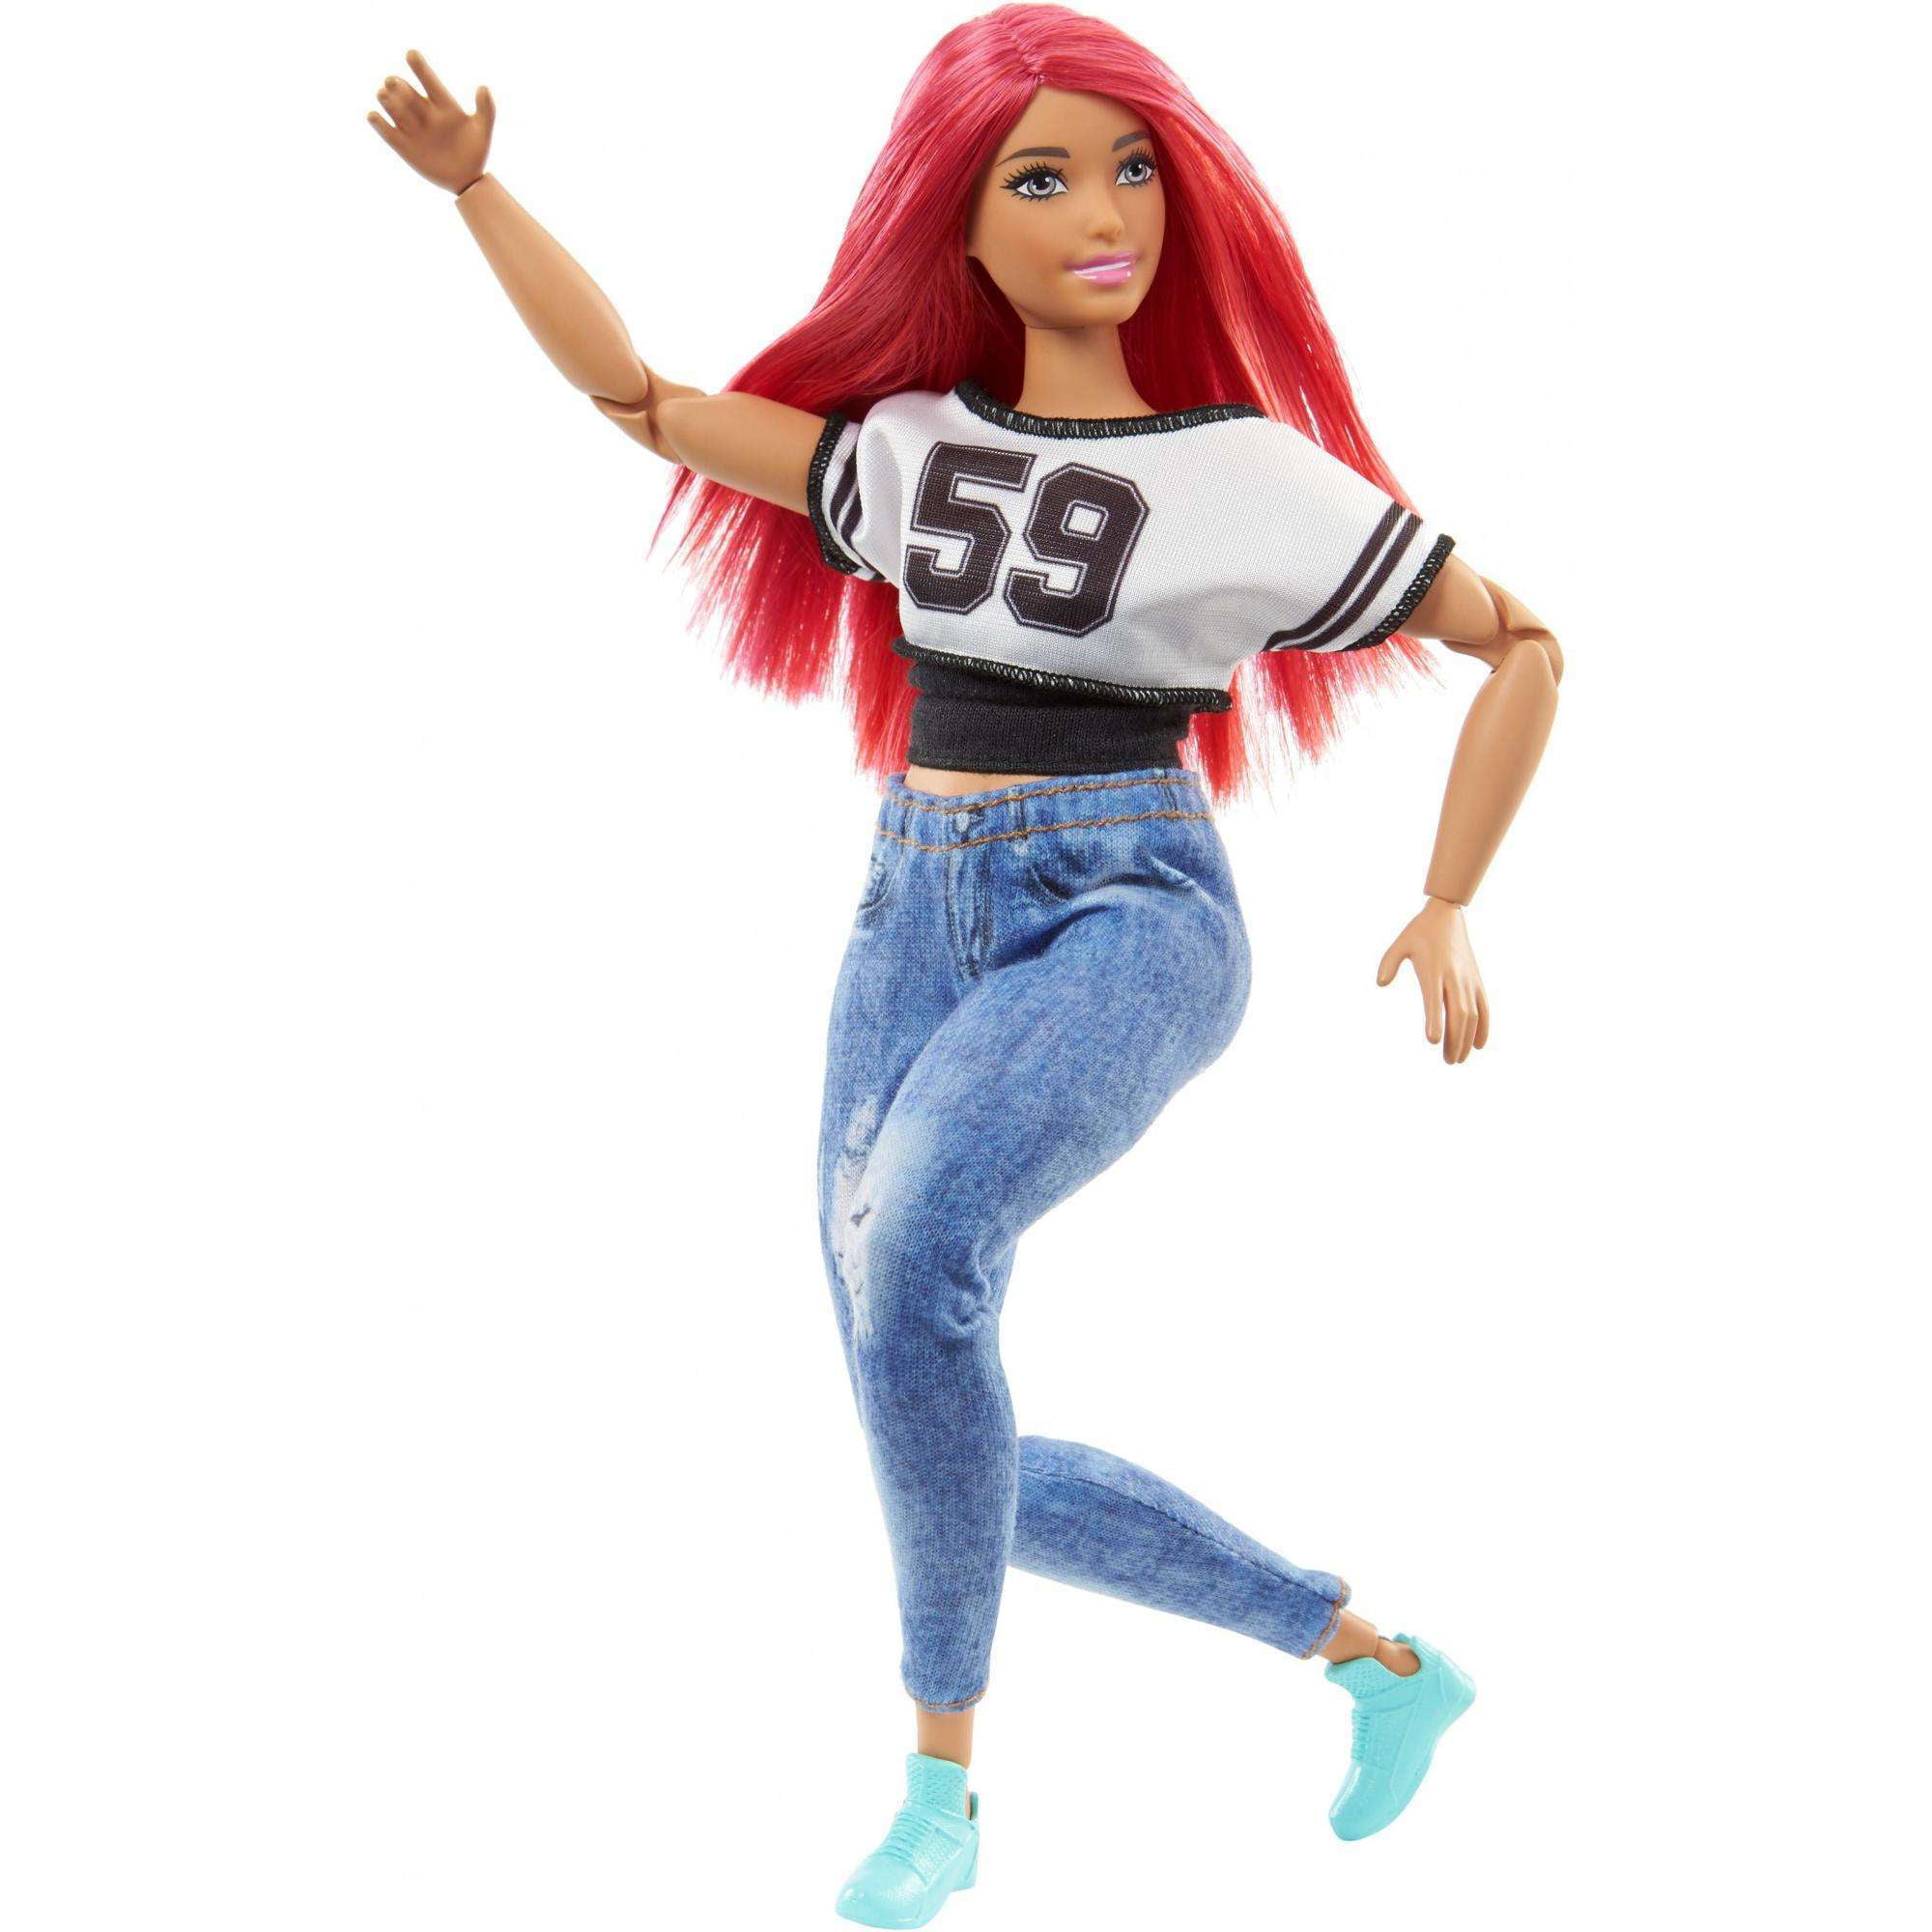 Barbie Sports Dancer Doll - Walmart.com 